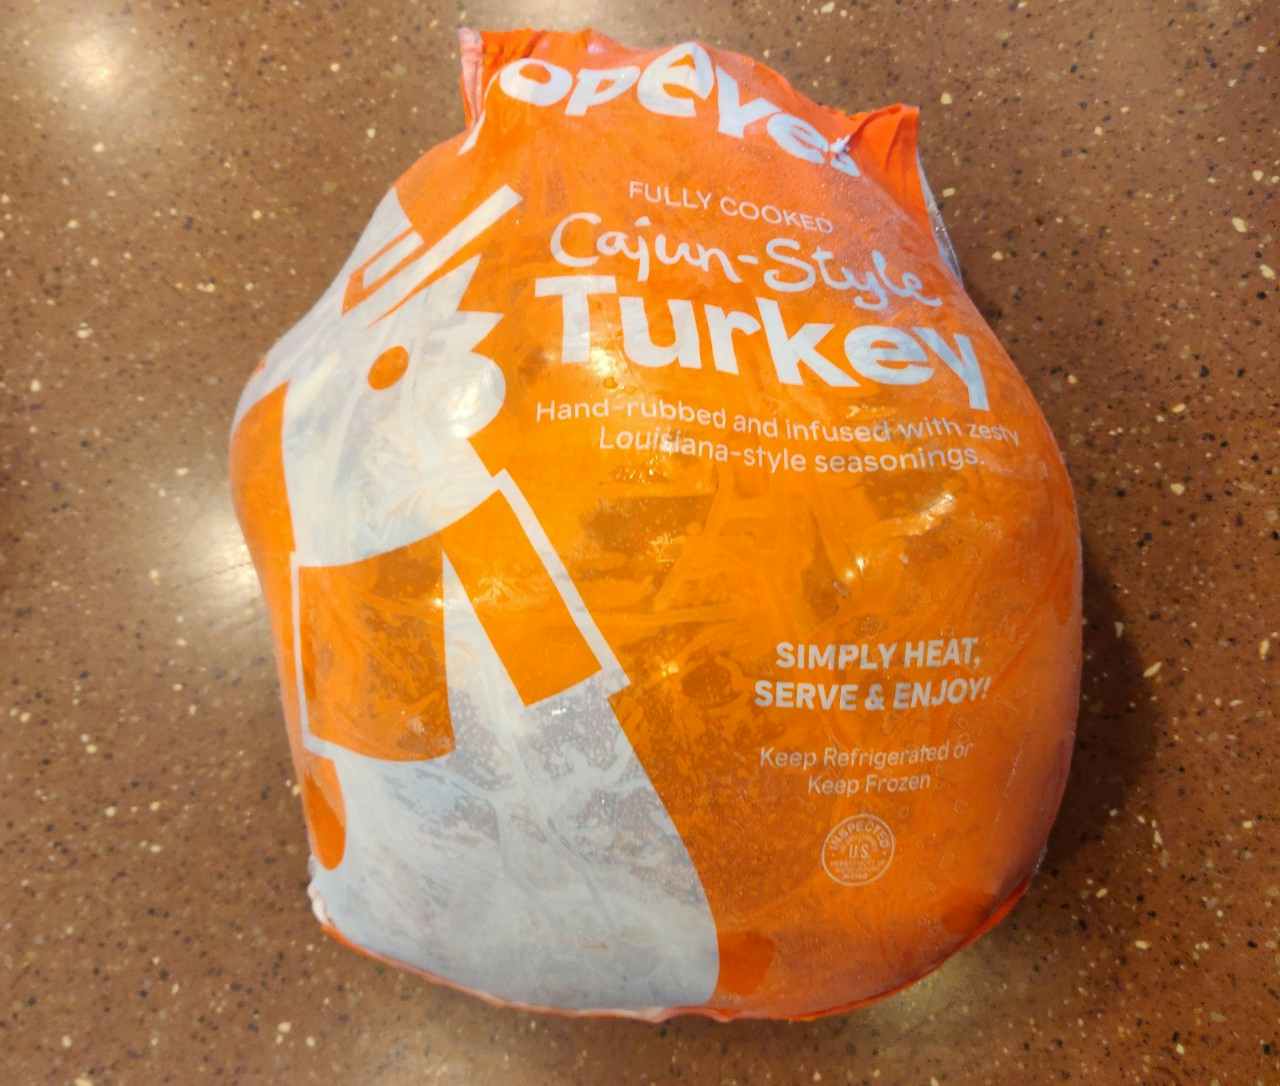 Popeyes Cajun-Style turkey sitting on a counter